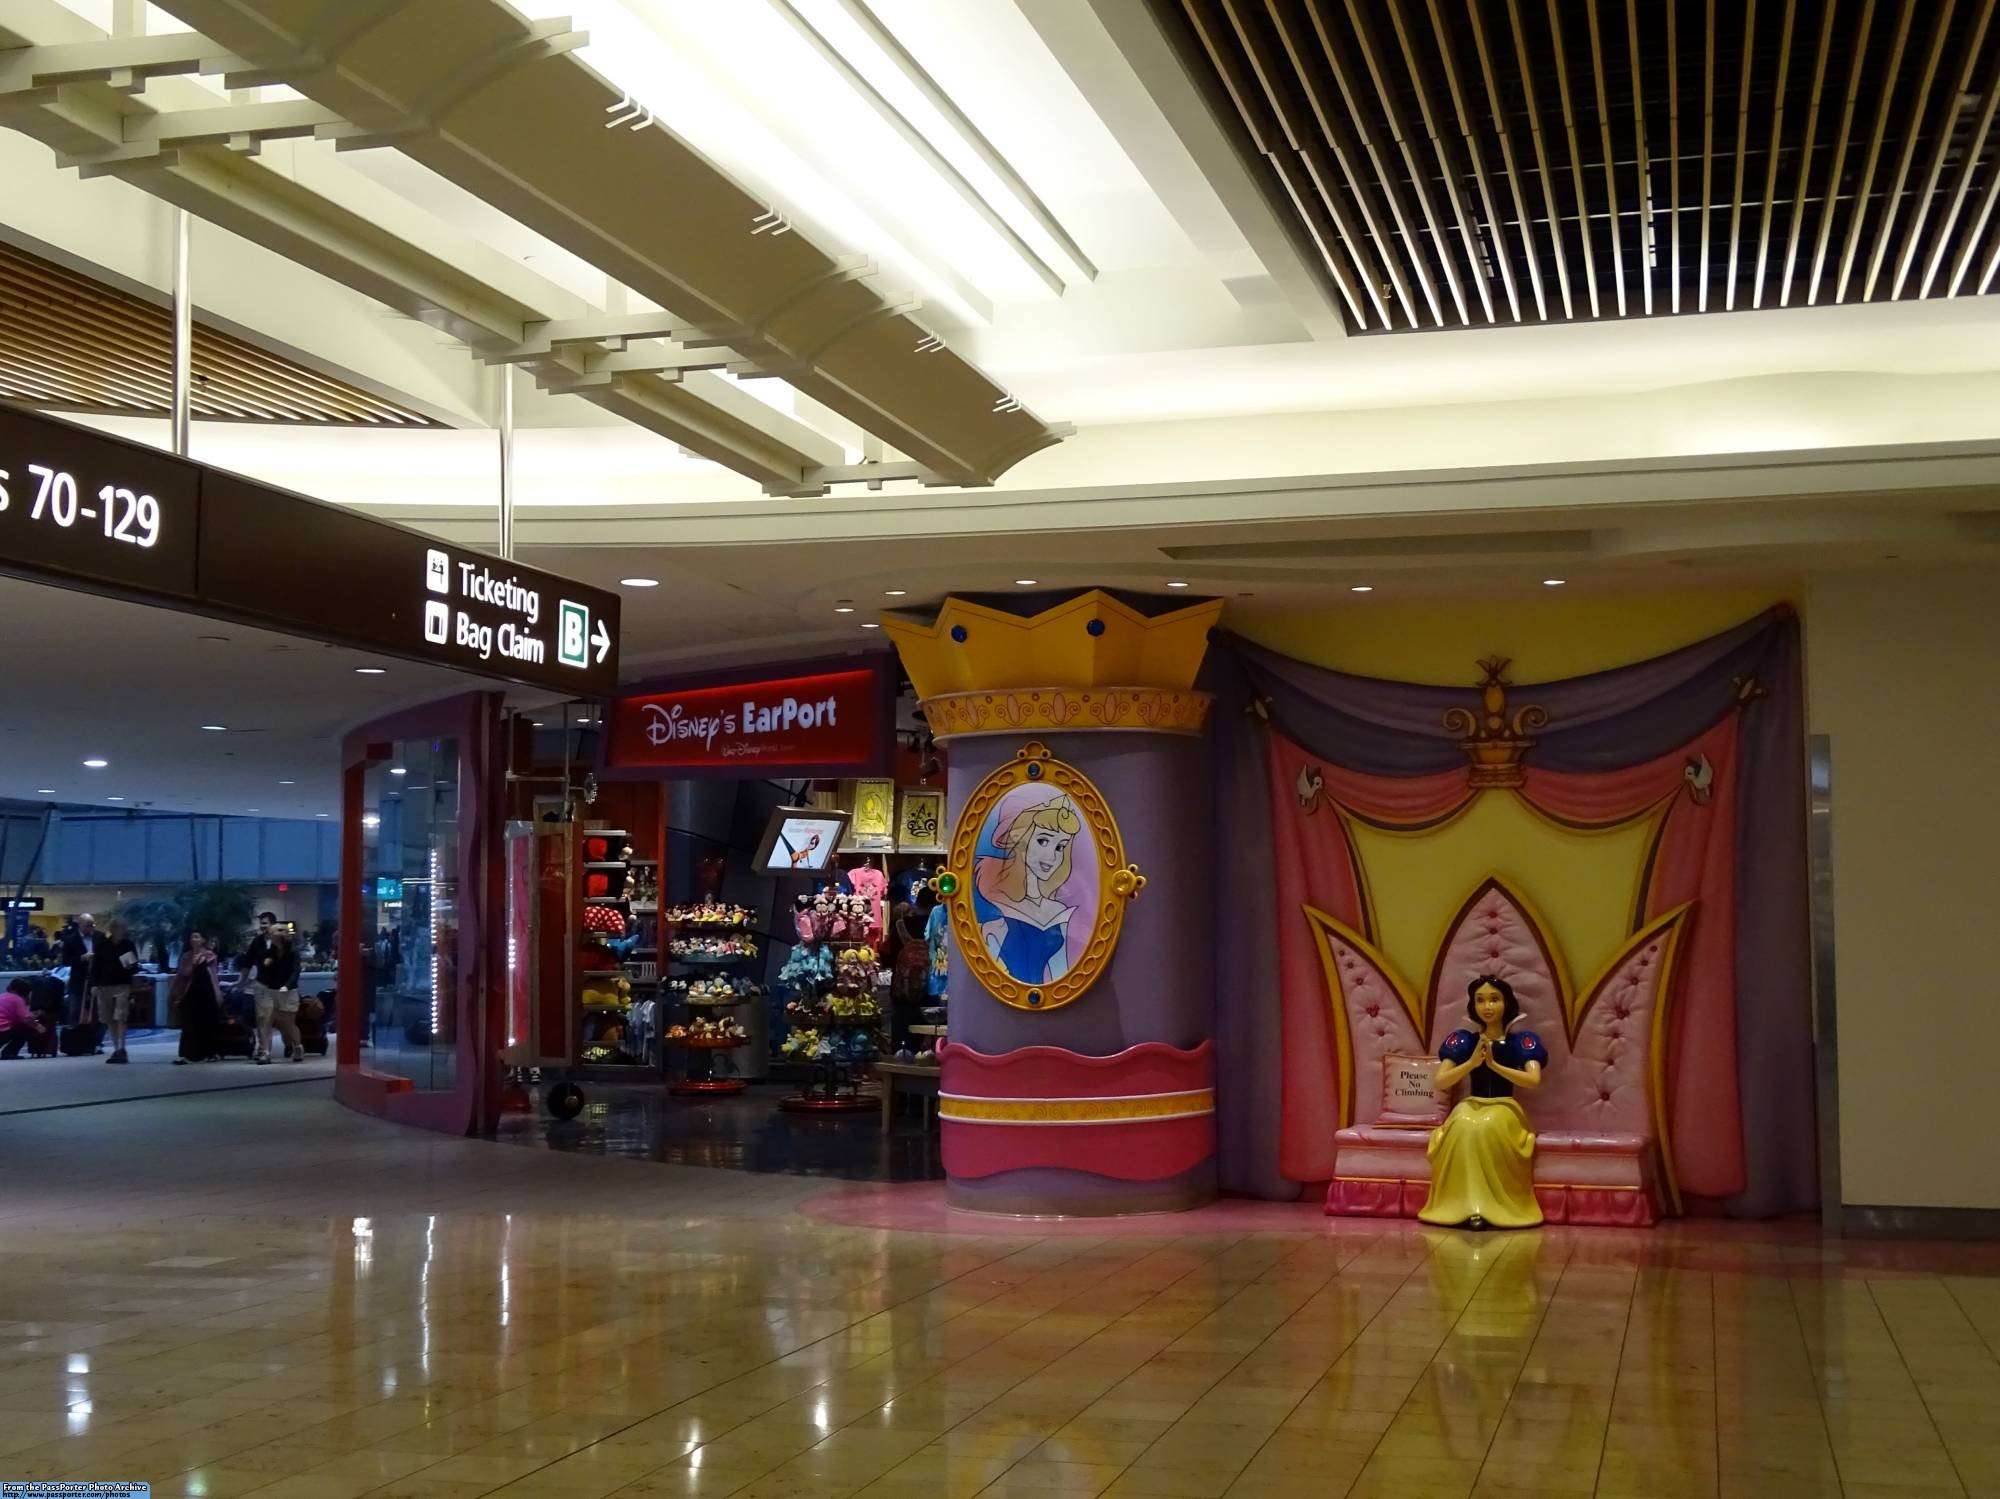 Orlando International Airport - Disney's EarPort store